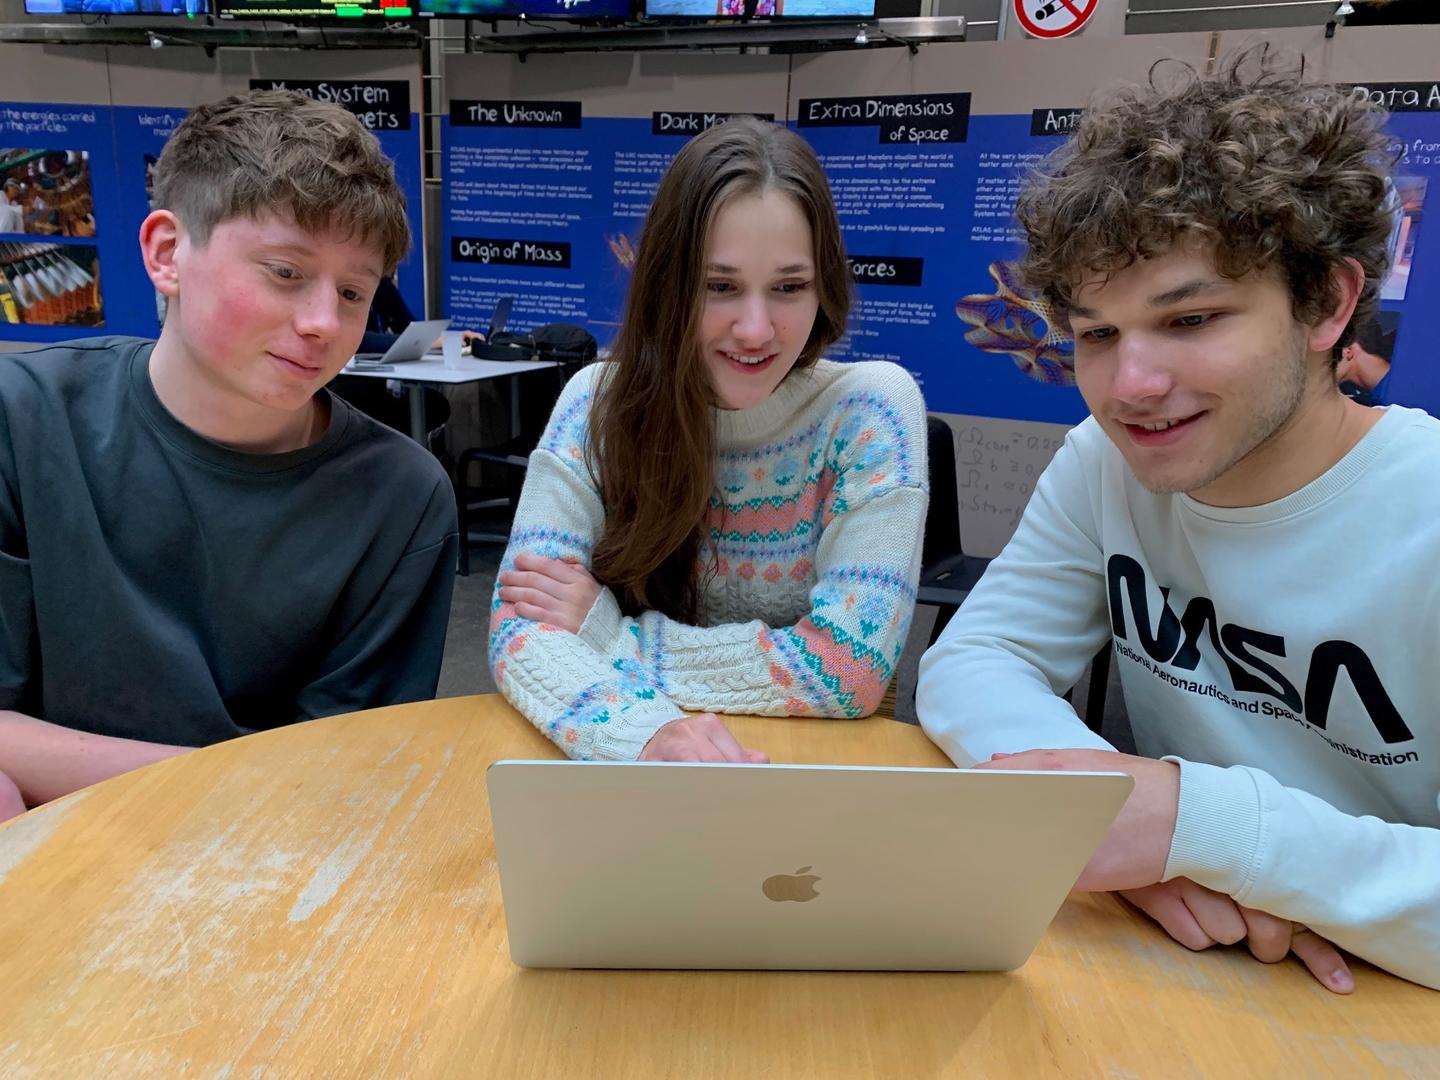 Three students around a laptop